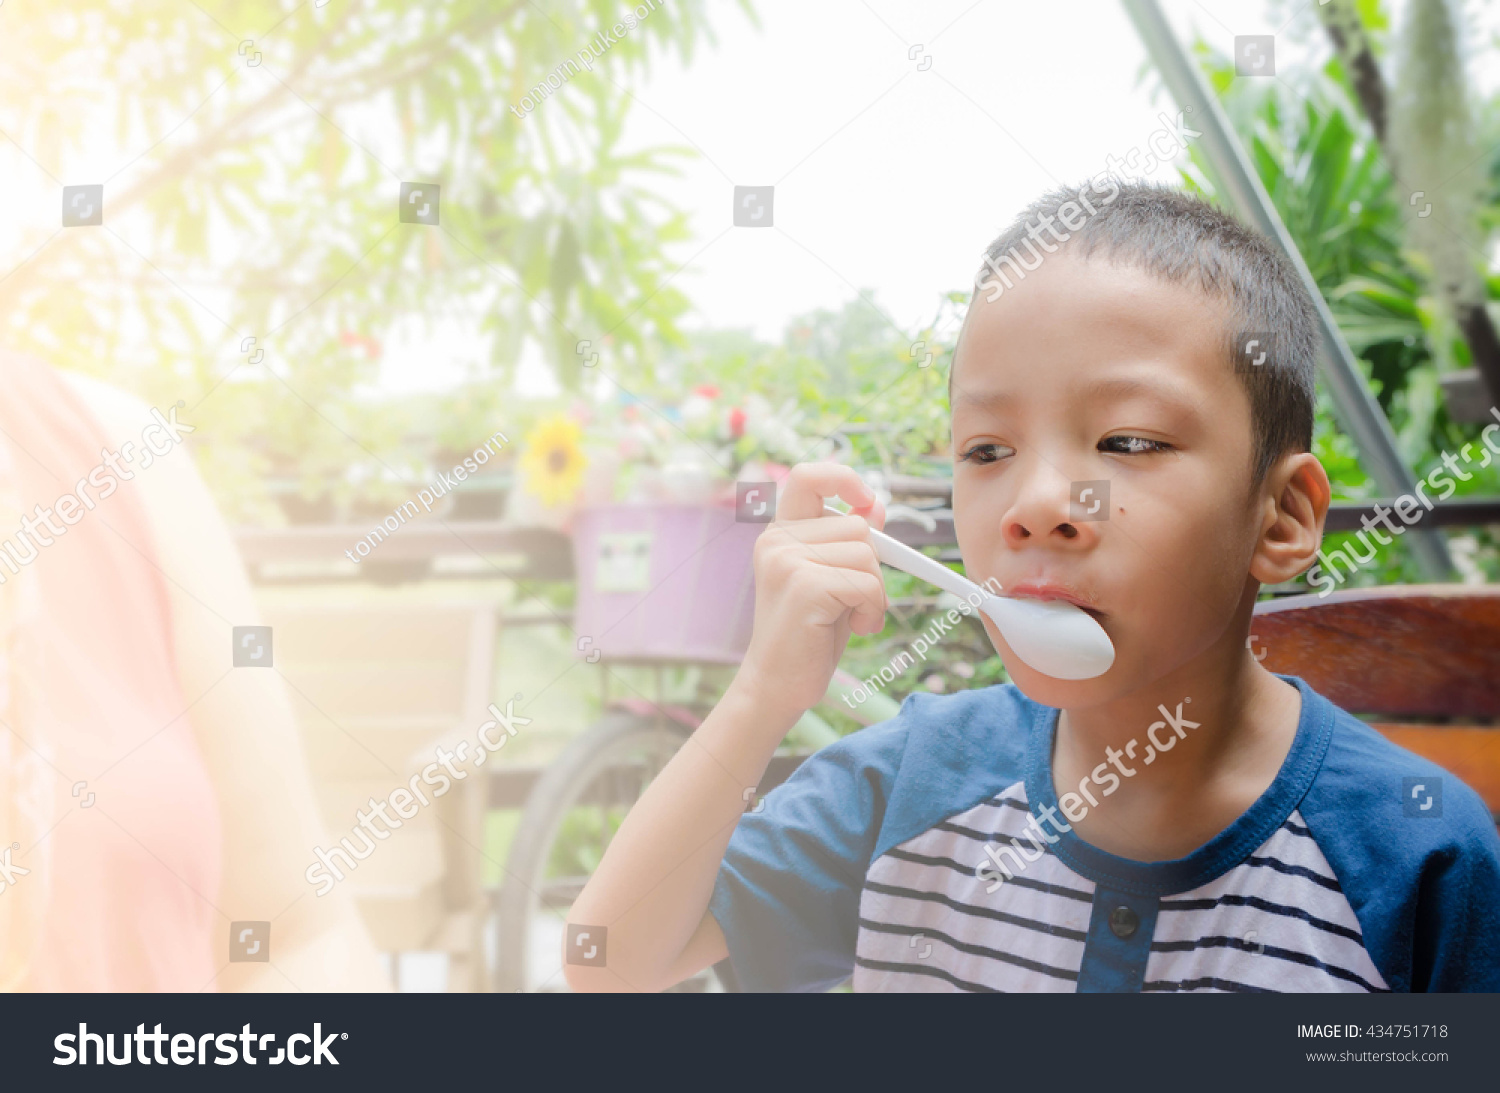 Boy Eating Breakfast Stock Photo 434751718 : Shutterstock